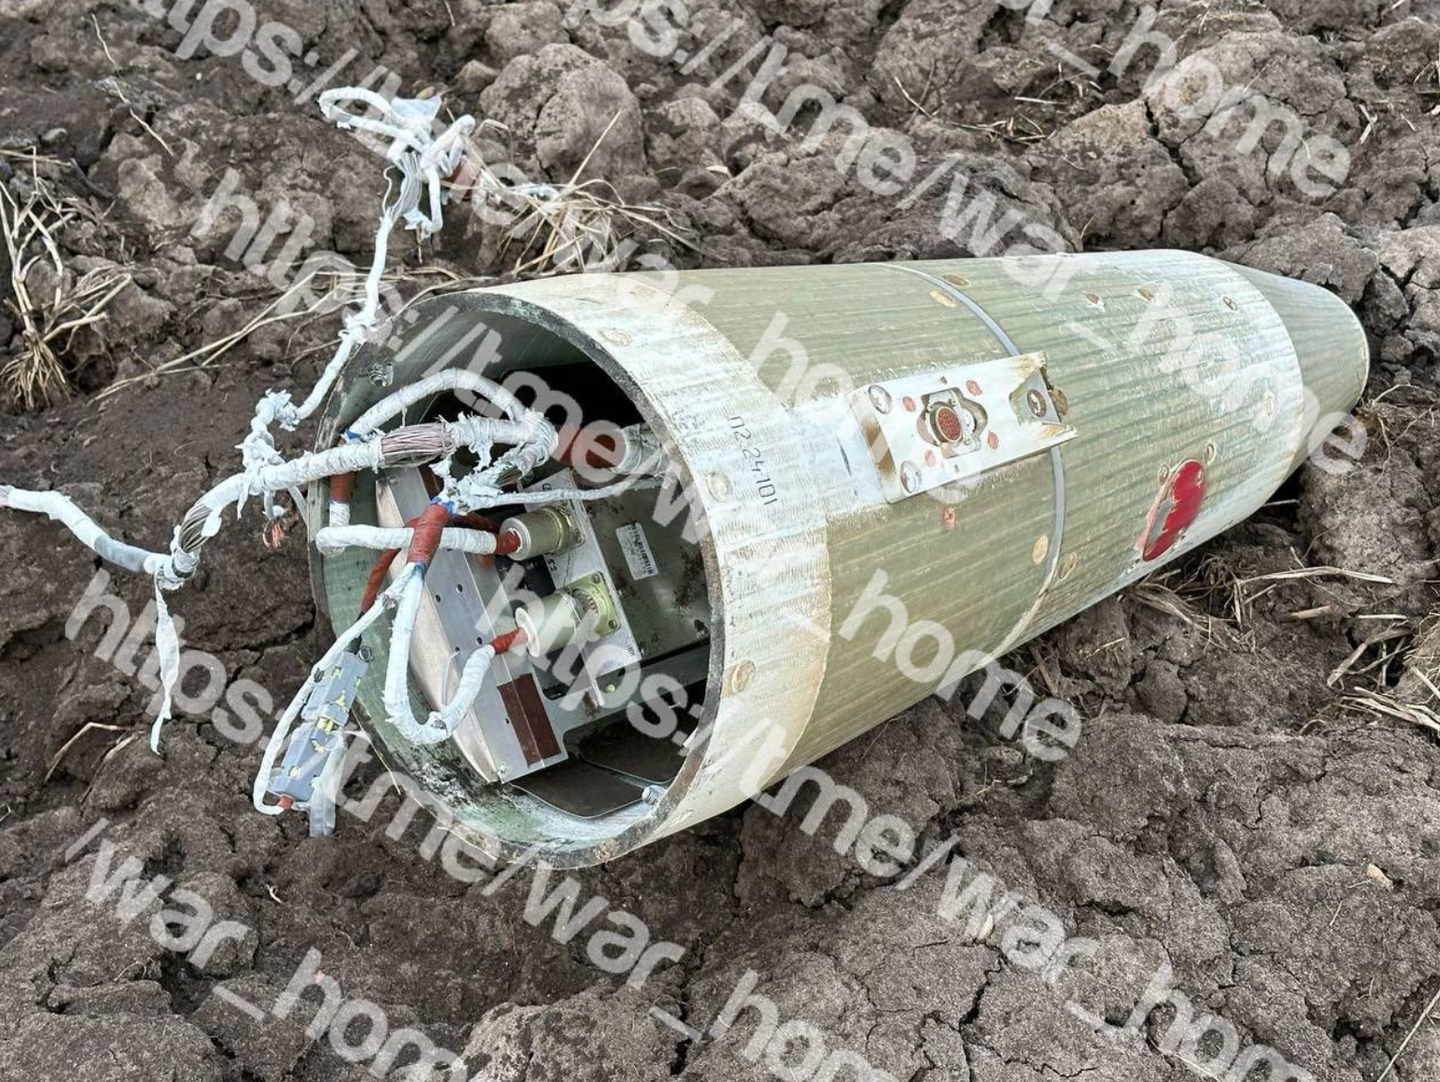 Views of the wreckage reveal some of the internal details of the glide bombs. <em>via X</em>